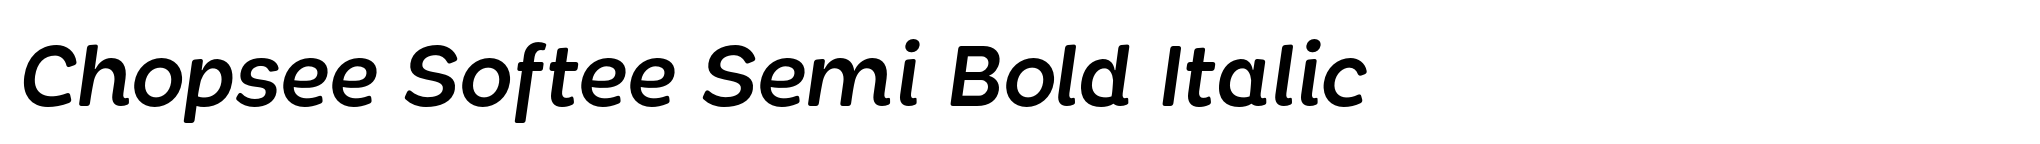 Chopsee Softee Semi Bold Italic image